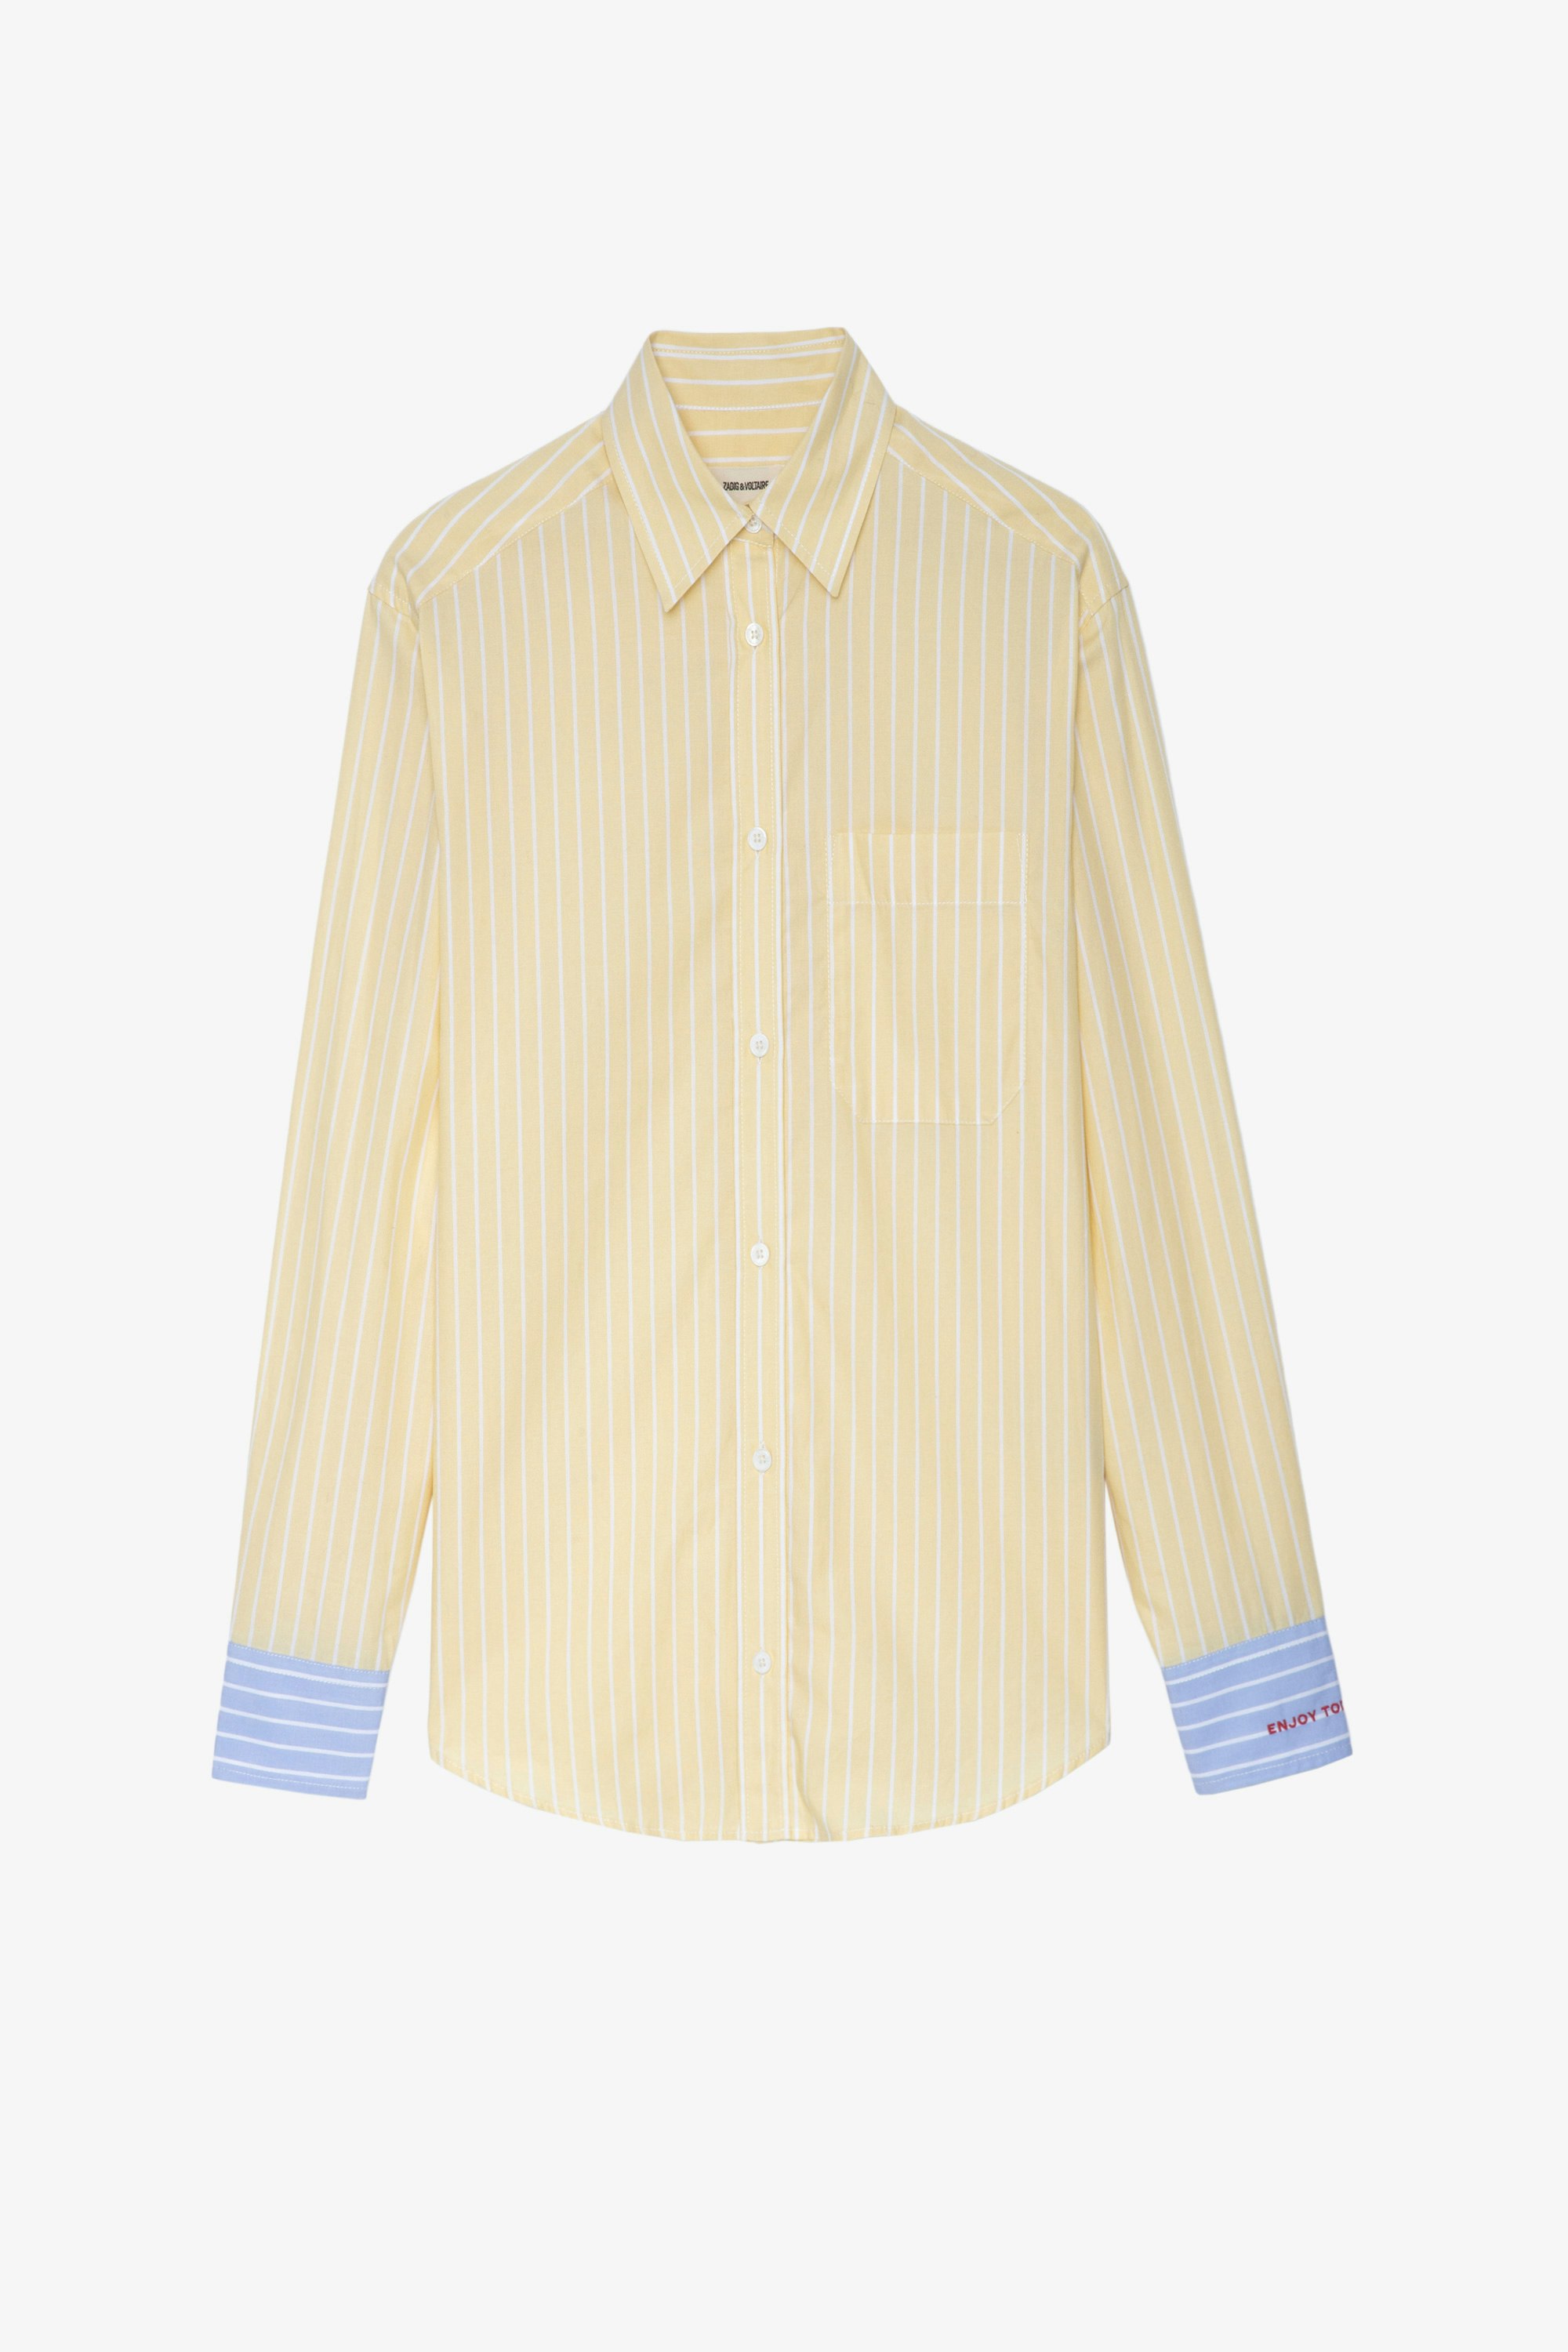 Tais Raye Pop Shirt Women’s yellow and pink striped cotton shirt